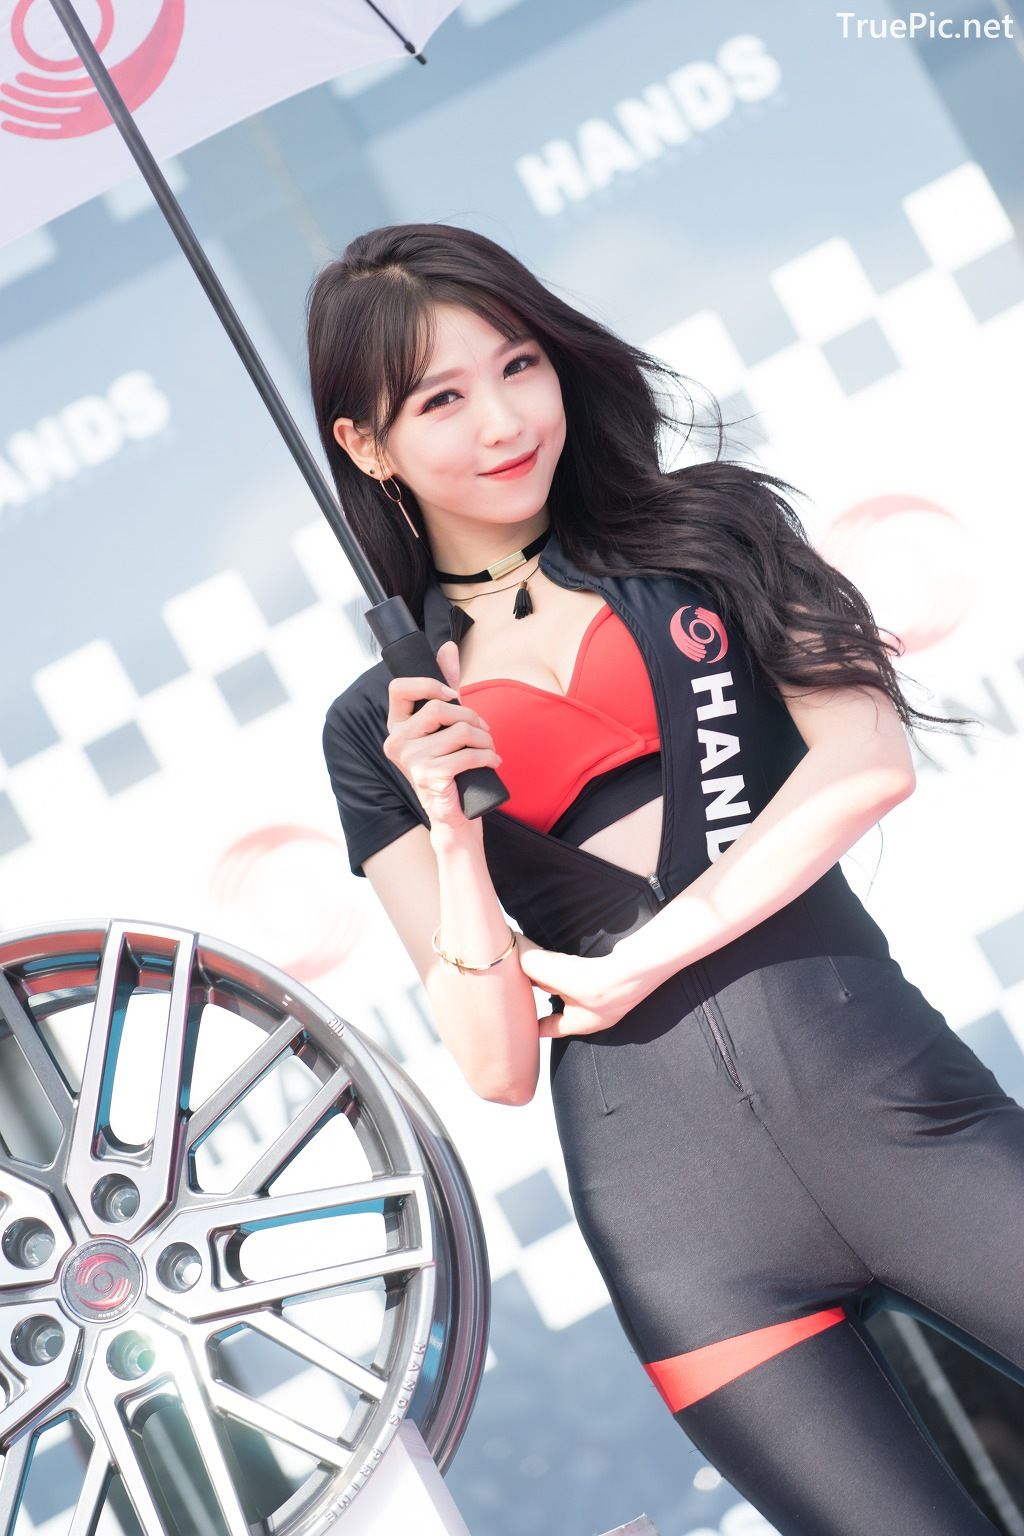 Image-Korean-Racing-Model-Lee-Eun-Hye-At-Incheon-Korea-Tuning-Festival-TruePic.net- Picture-214